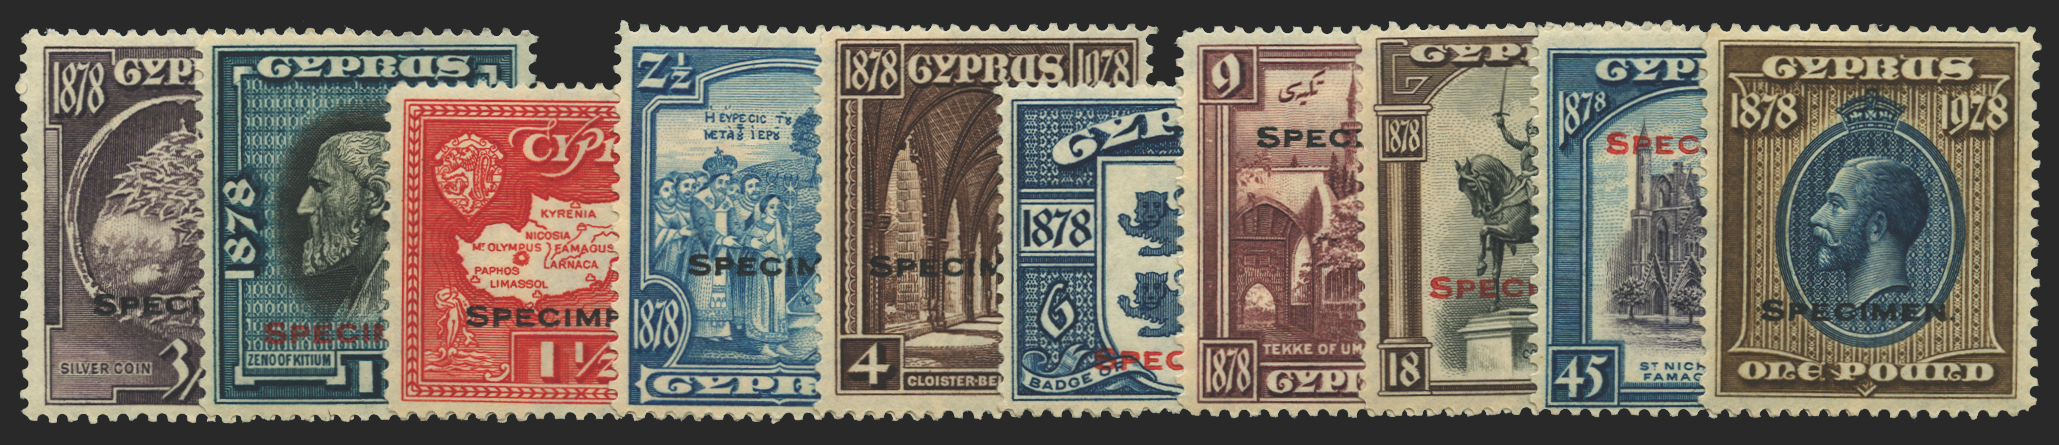 Cyprus 1928 50th Anniversary set of 10 to £1, SPECIMEN, SG123s/32s